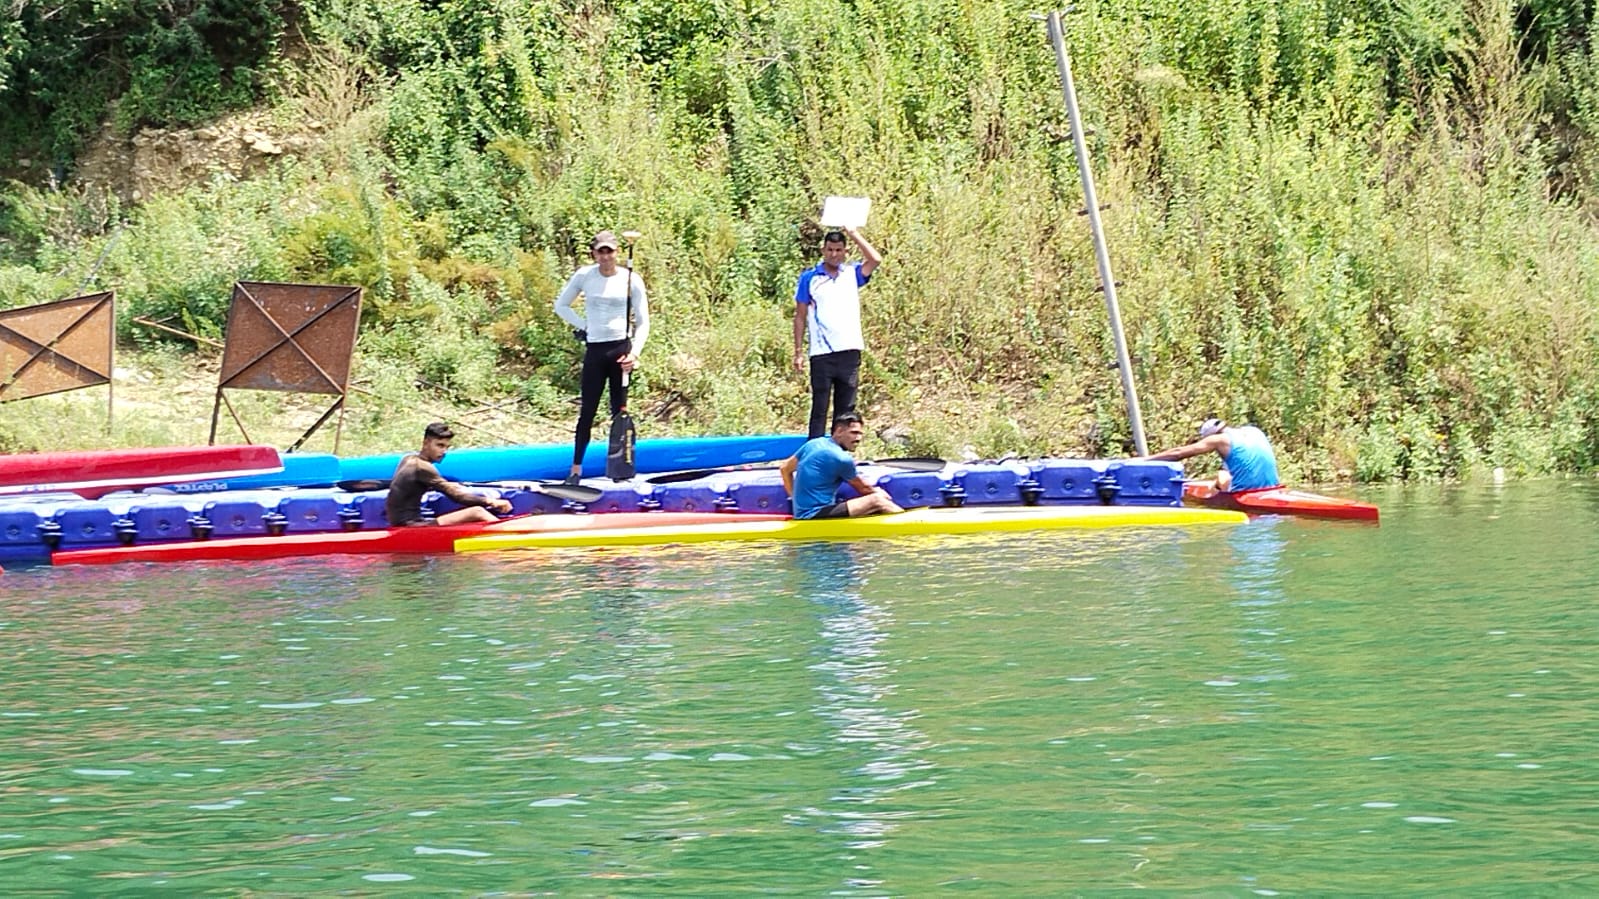 Kayaking and Canoeing Water Sports Championship